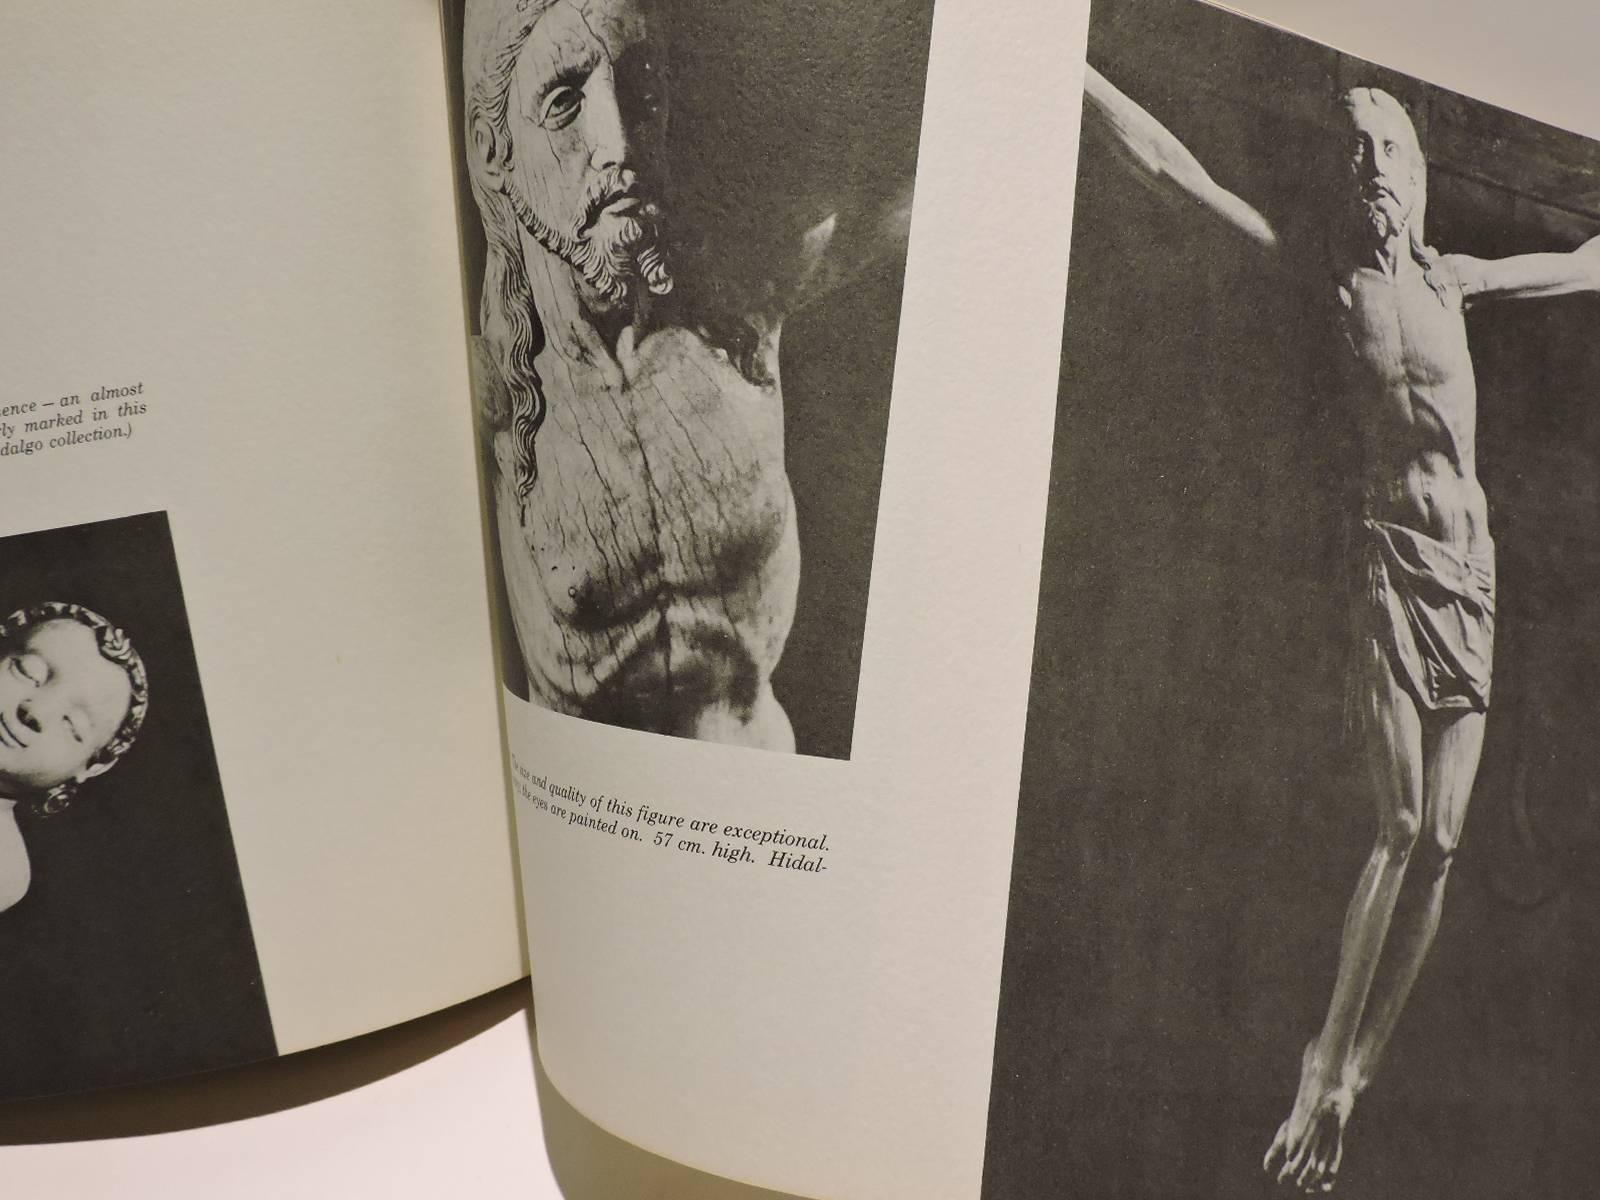 Mid-20th Century Philippine Religious Imagery, Fernando Zobel De Ayala - 1st Edition - 1963